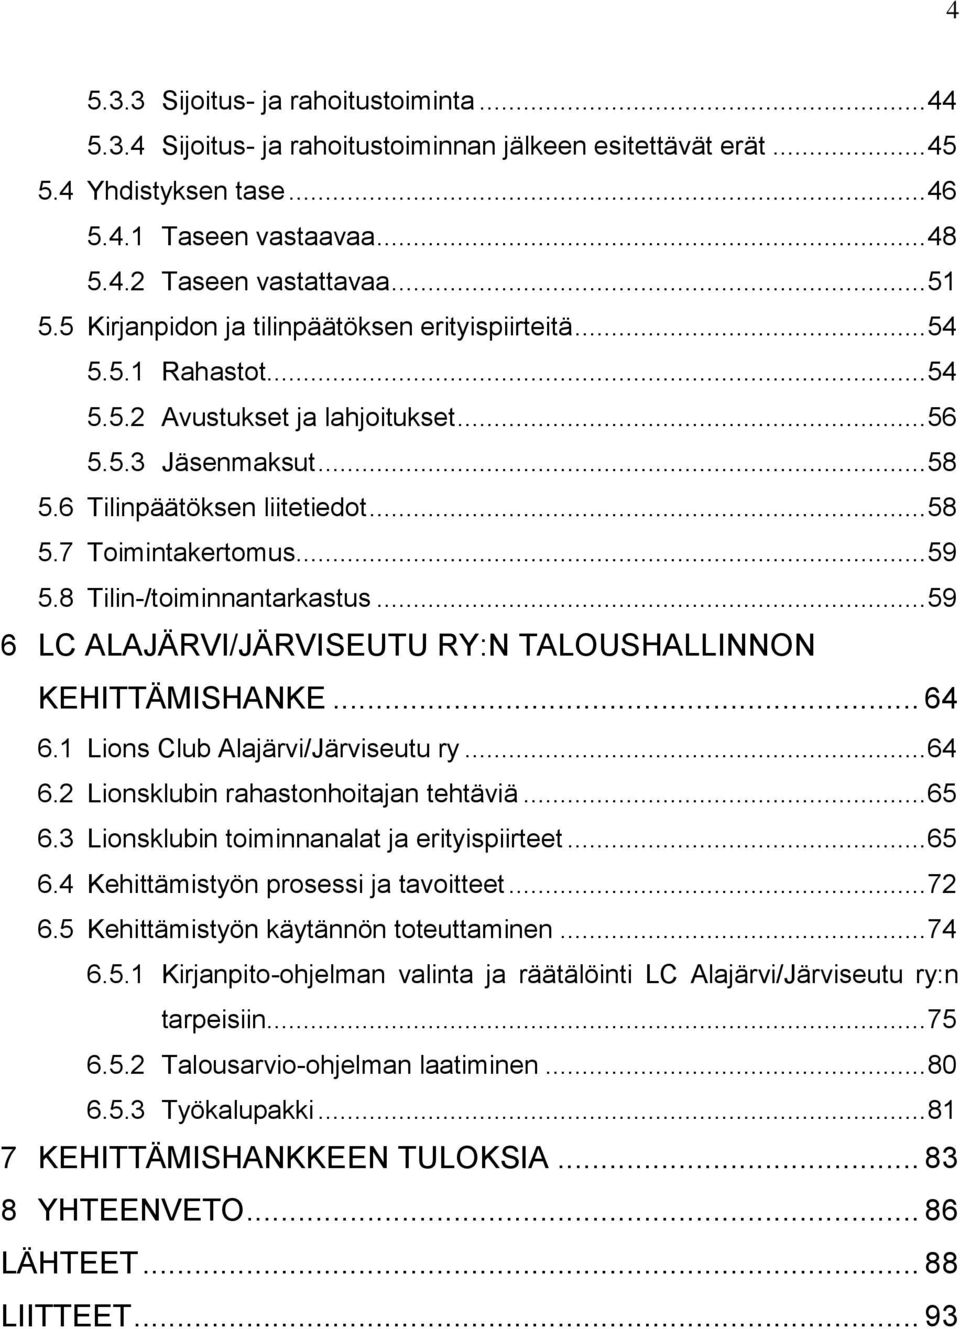 .. 59 5.8 Tilin-/toiminnantarkastus... 59 6 LC ALAJÄRVI/JÄRVISEUTU RY:N TALOUSHALLINNON KEHITTÄMISHANKE... 64 6.1 Lions Club Alajärvi/Järviseutu ry... 64 6.2 Lionsklubin rahastonhoitajan tehtäviä.